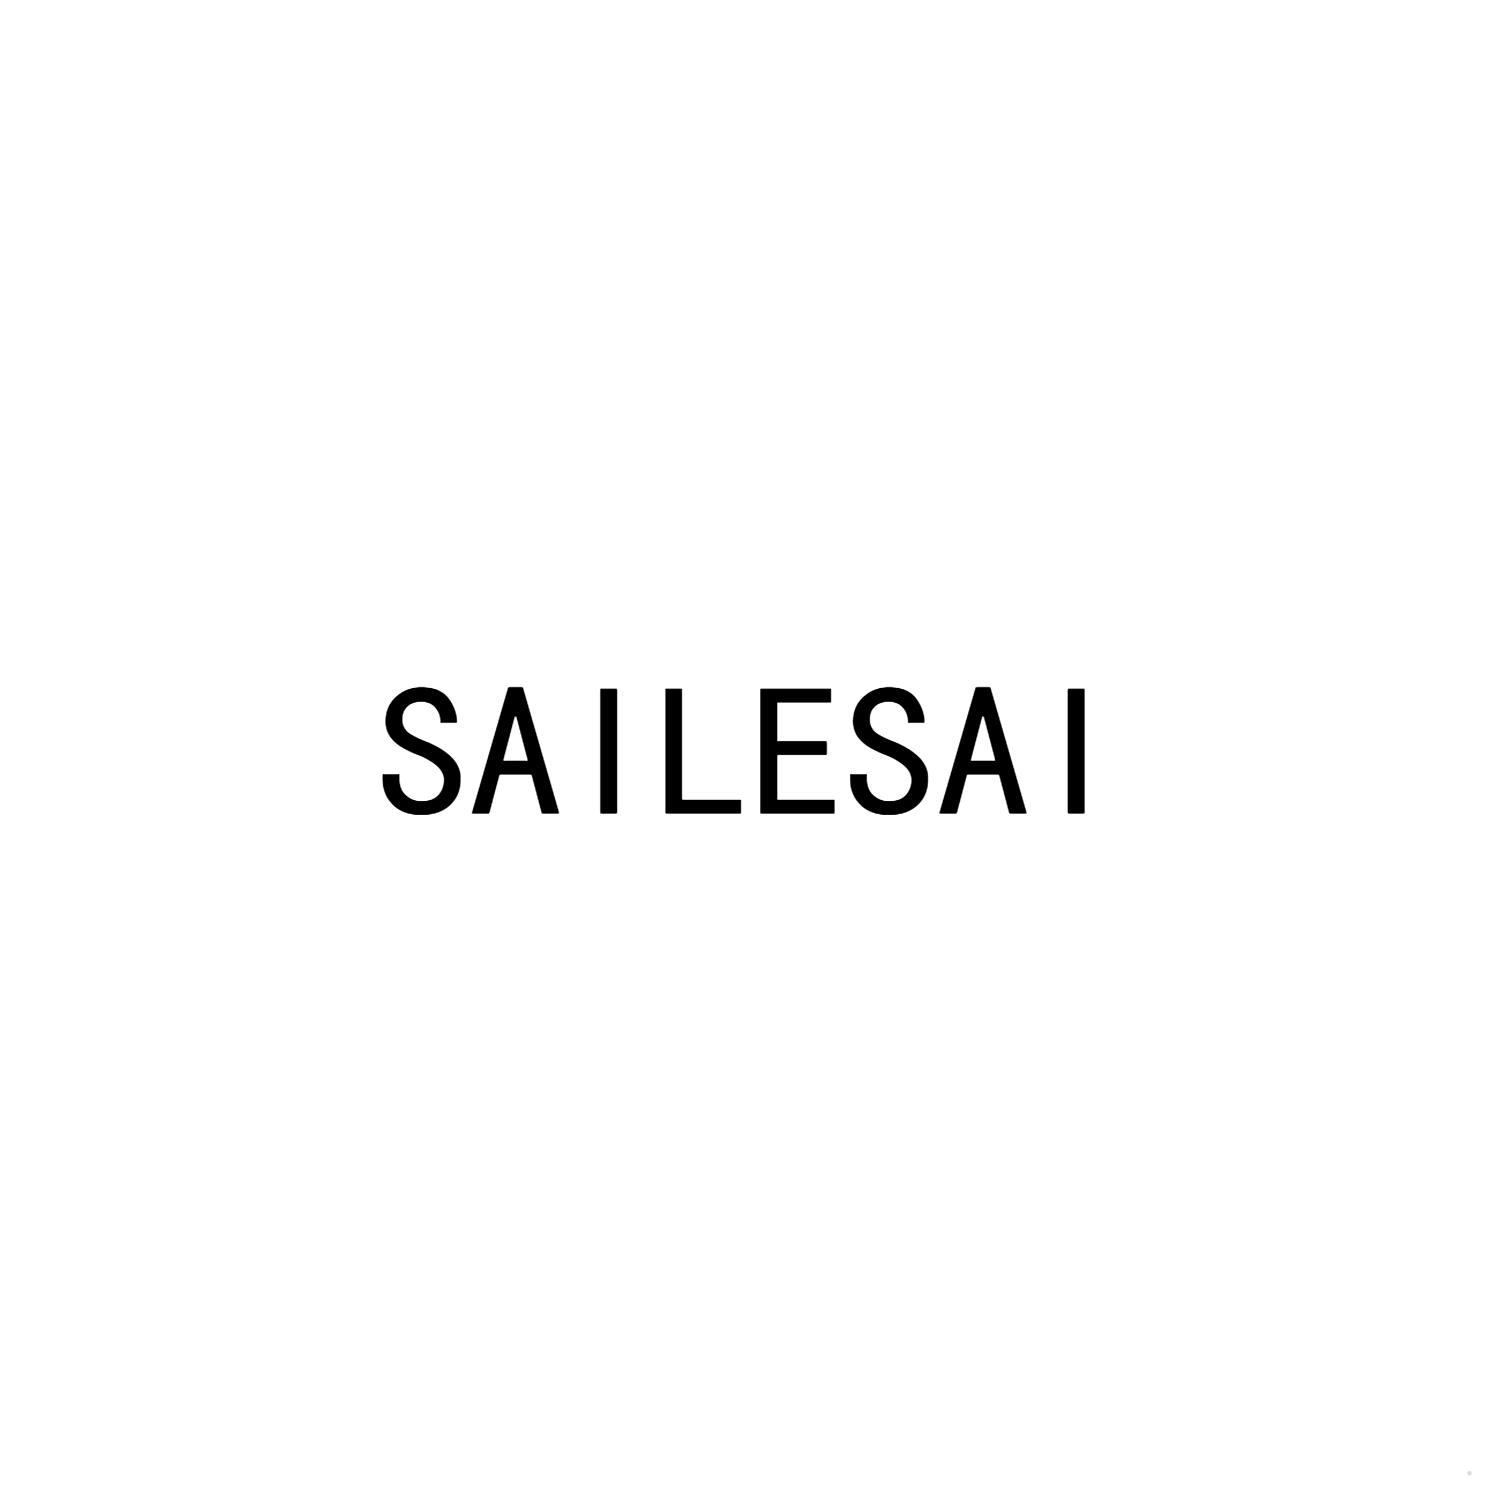 SAILESAI